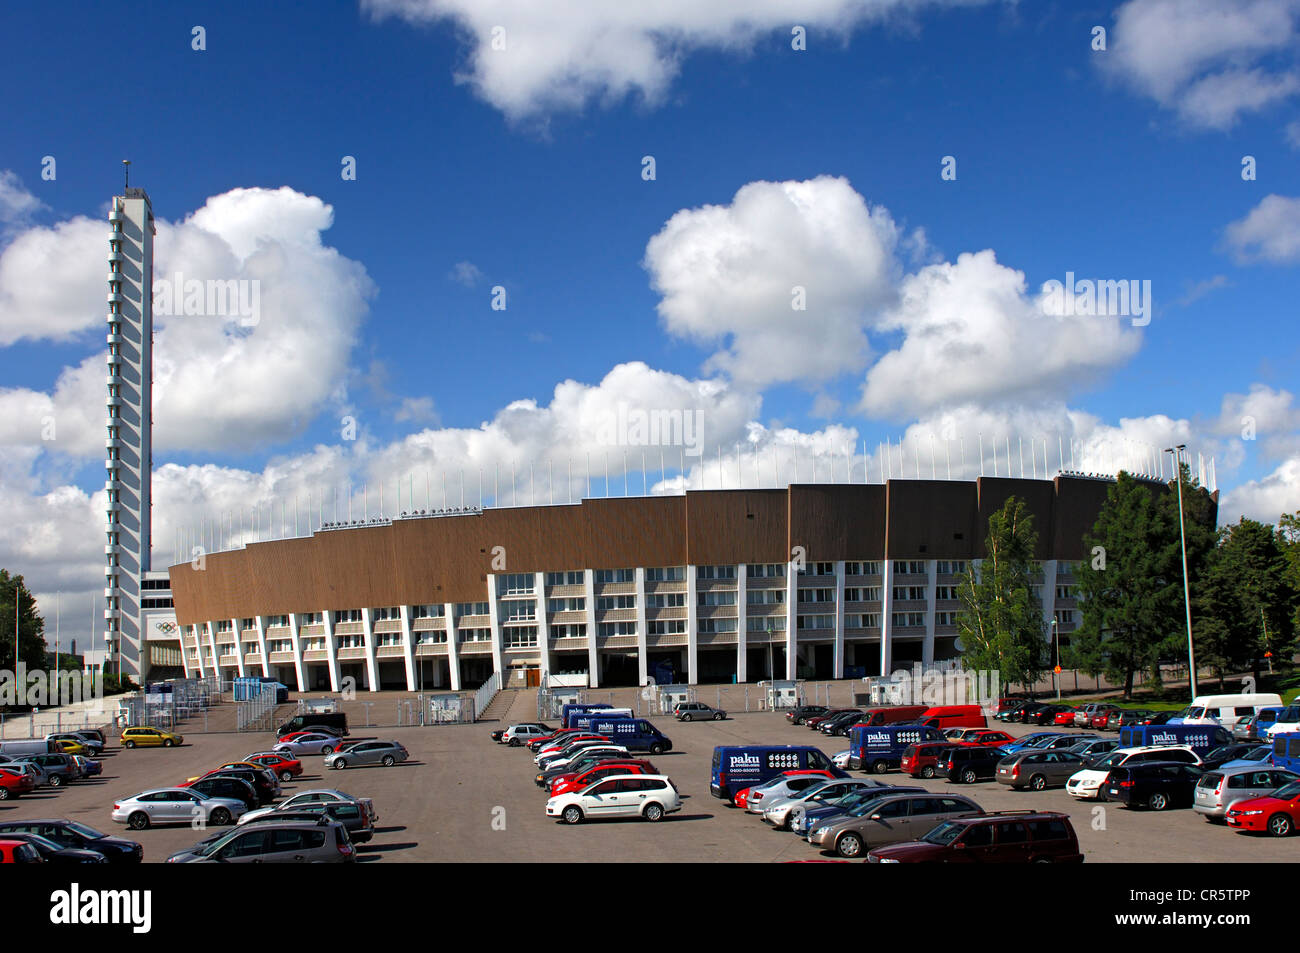 Tower et Stade Olympique, au-dessus de nuages blancs, Helsinki, Finlande, Europe Banque D'Images